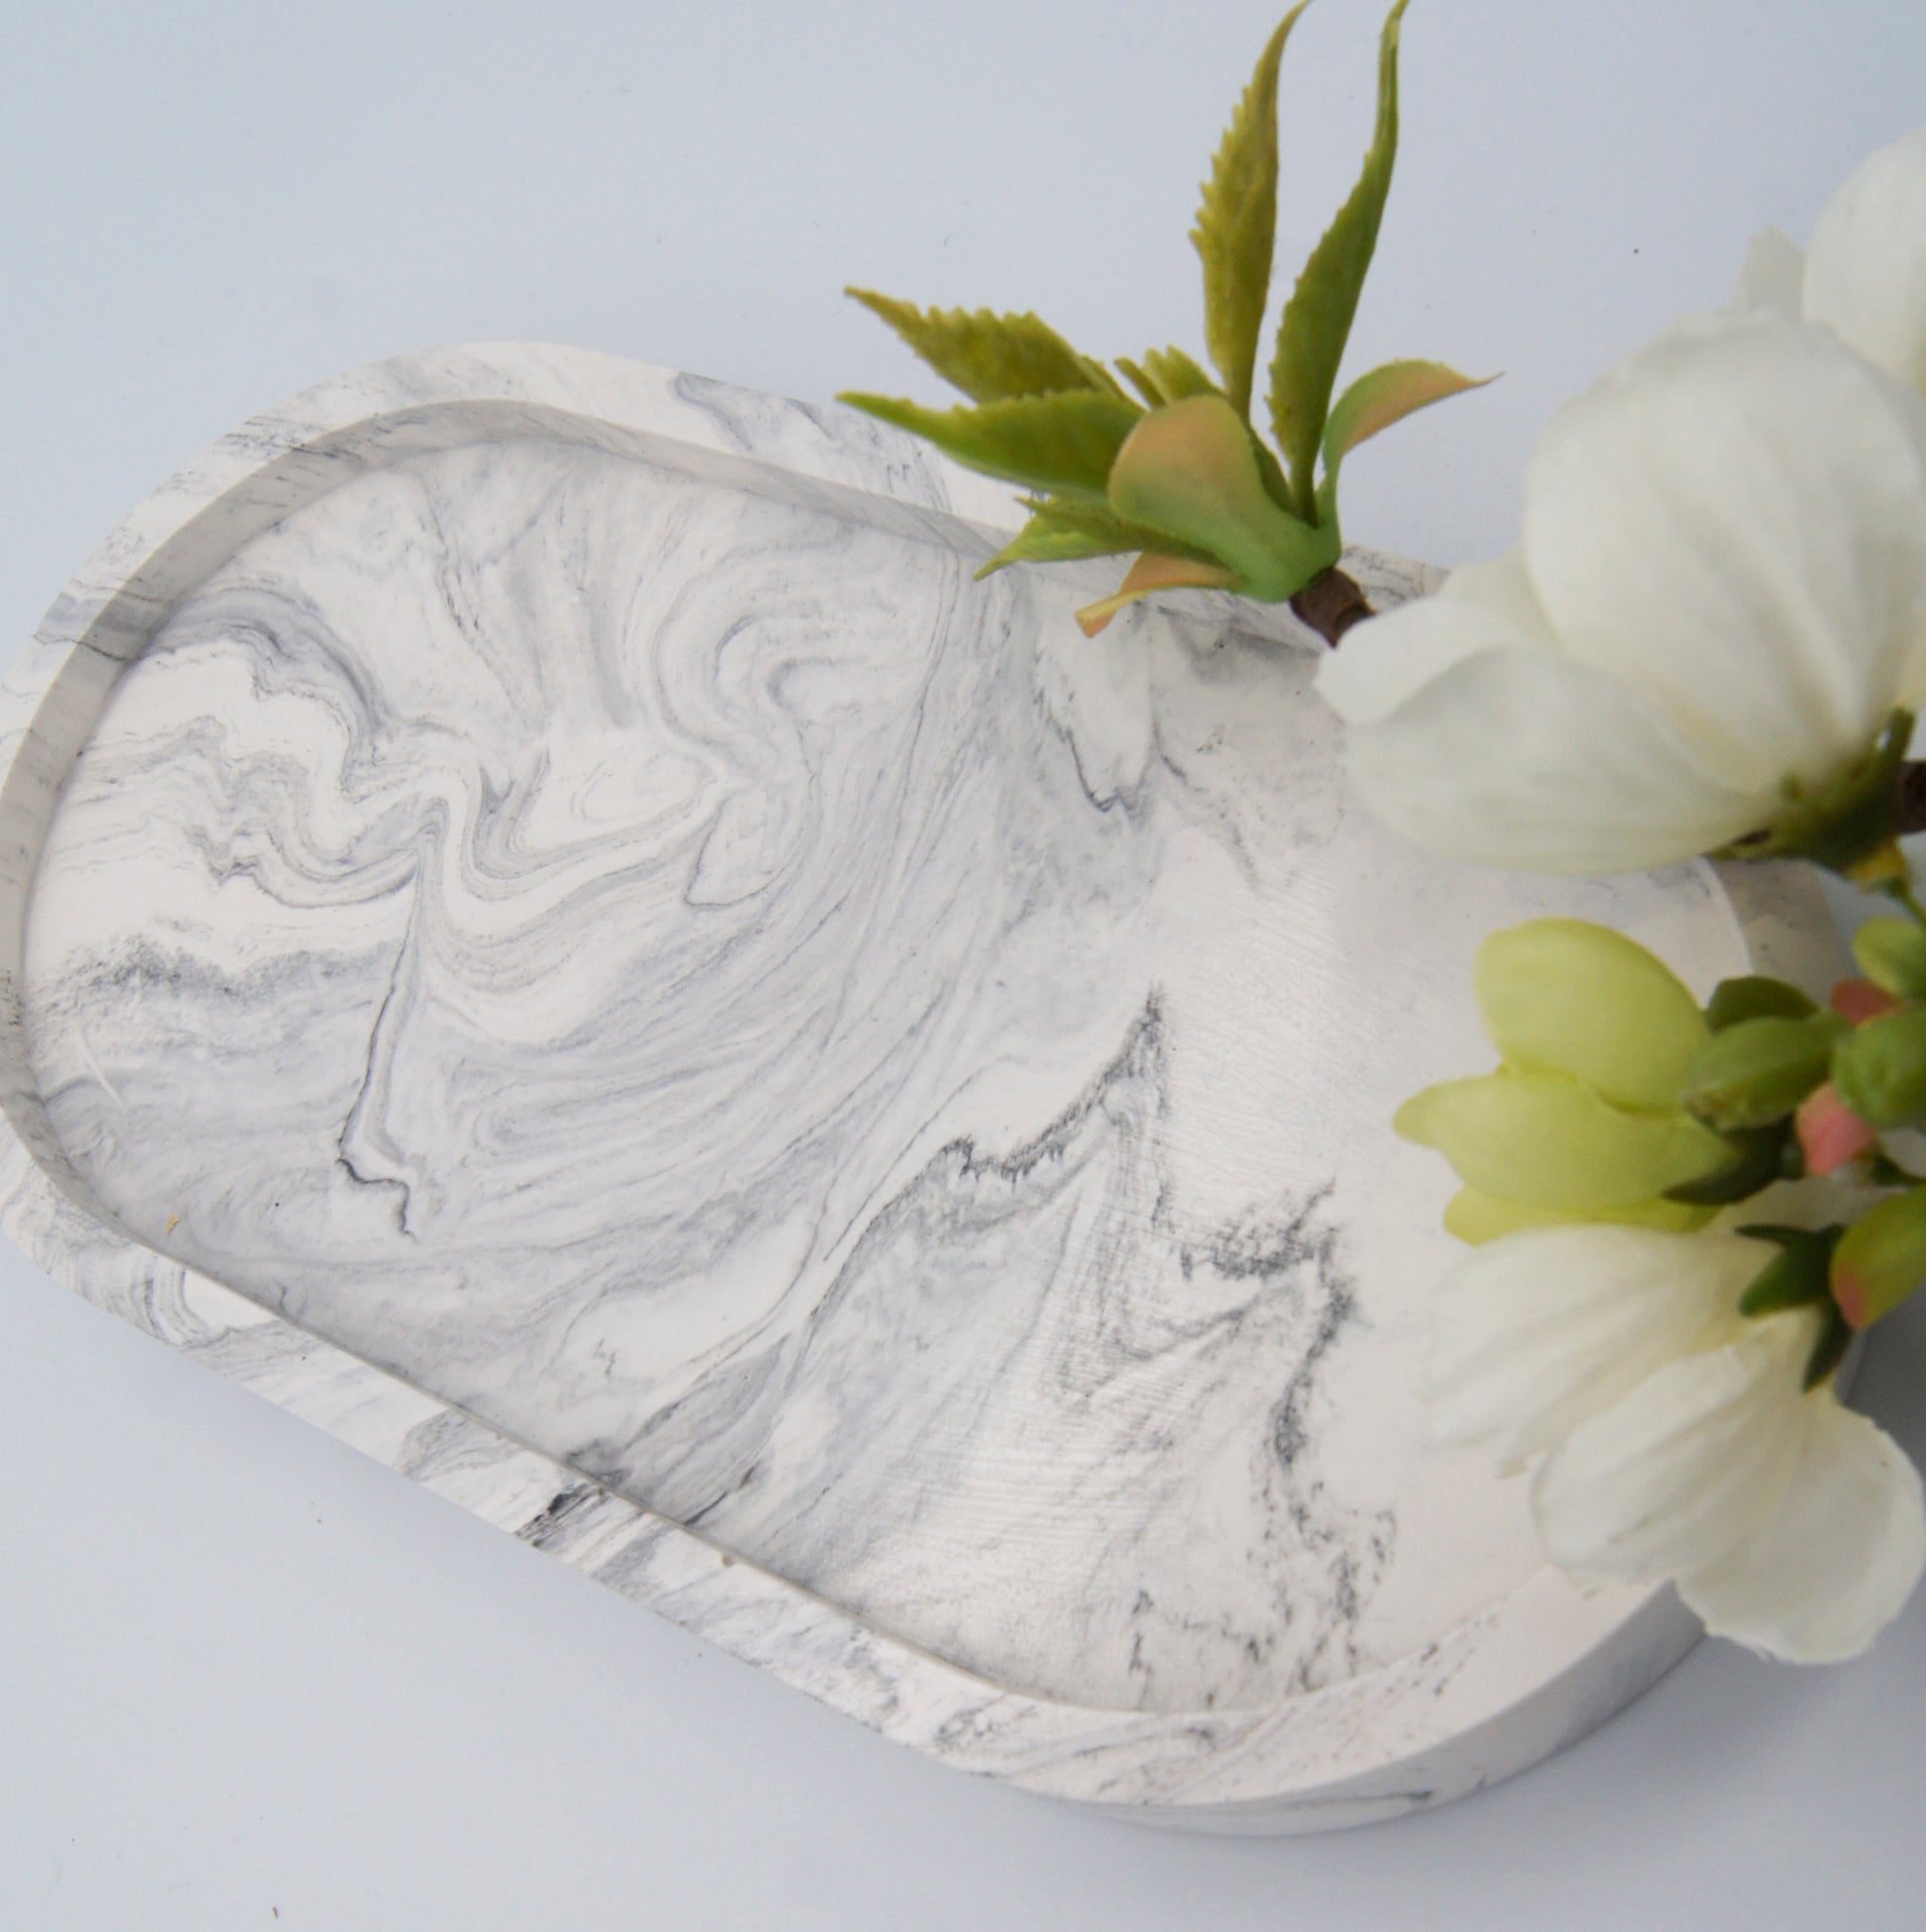 Marmor dekorationsbakke -  Oval 18 cm - bykrums.dk - steypt